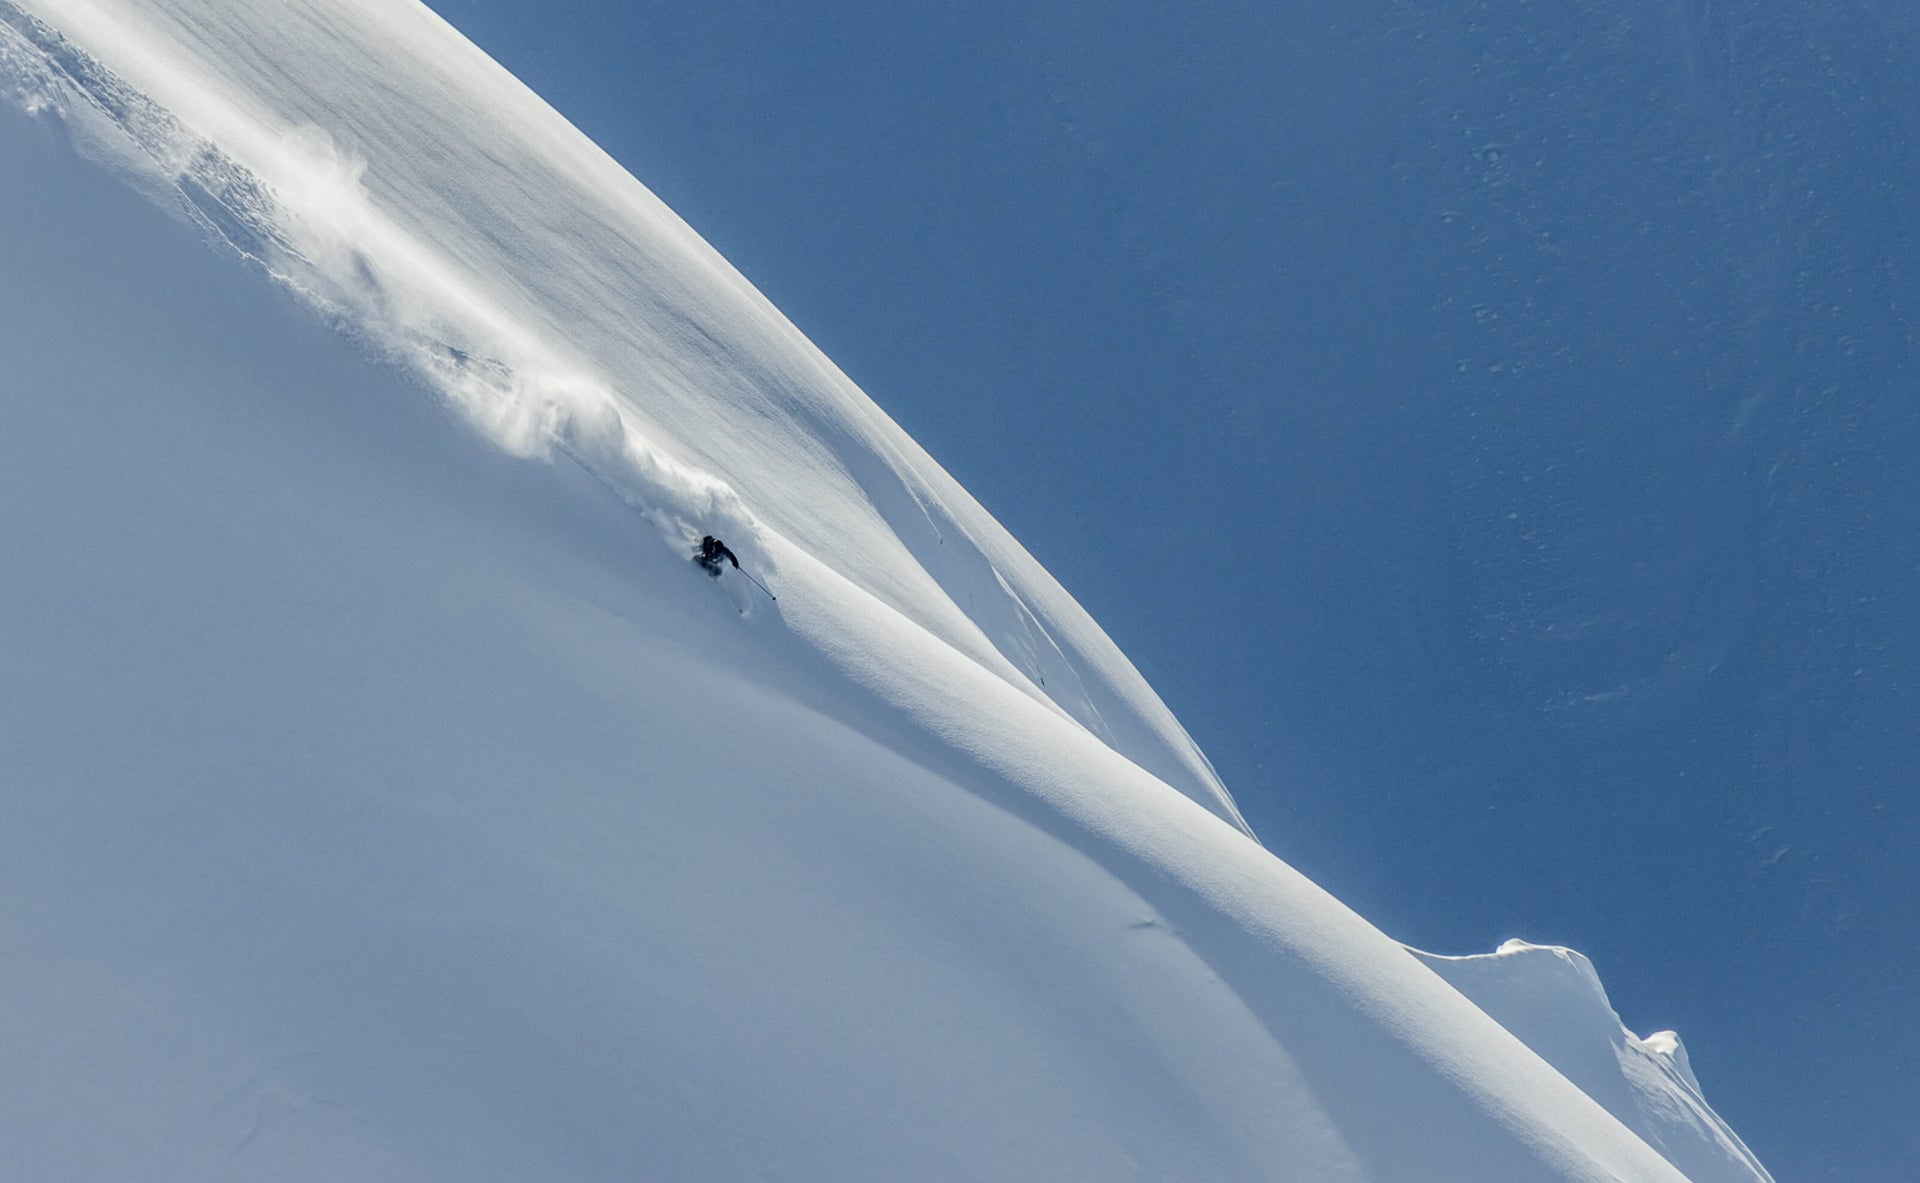 Skier slashing a pow turn on a big alpine line